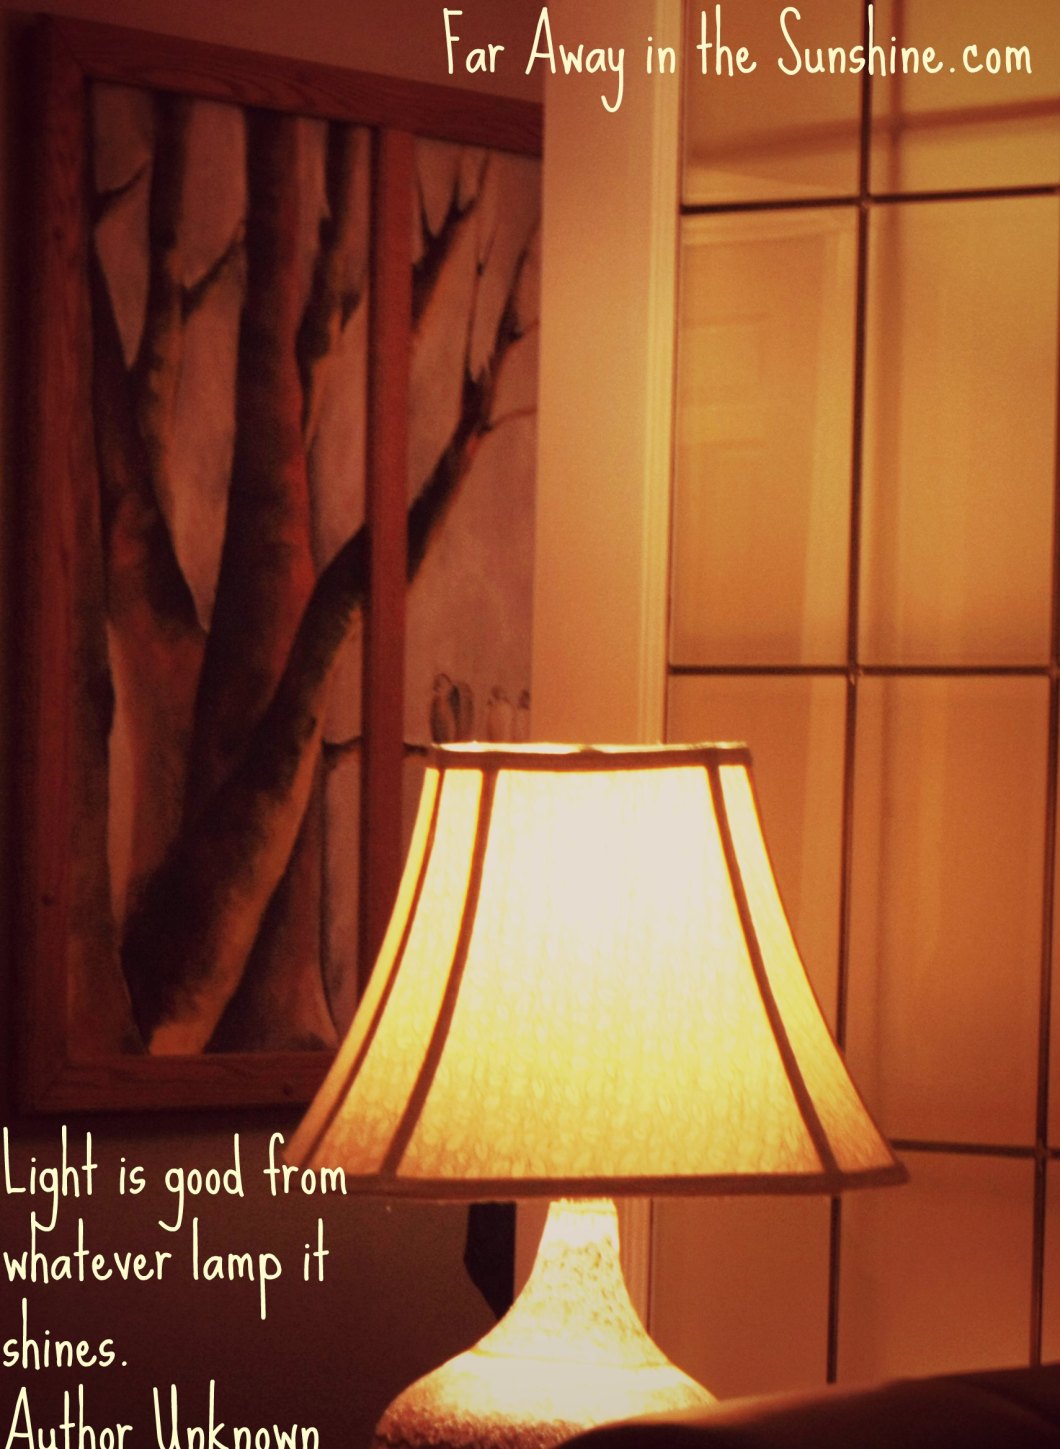 Lamp & Light